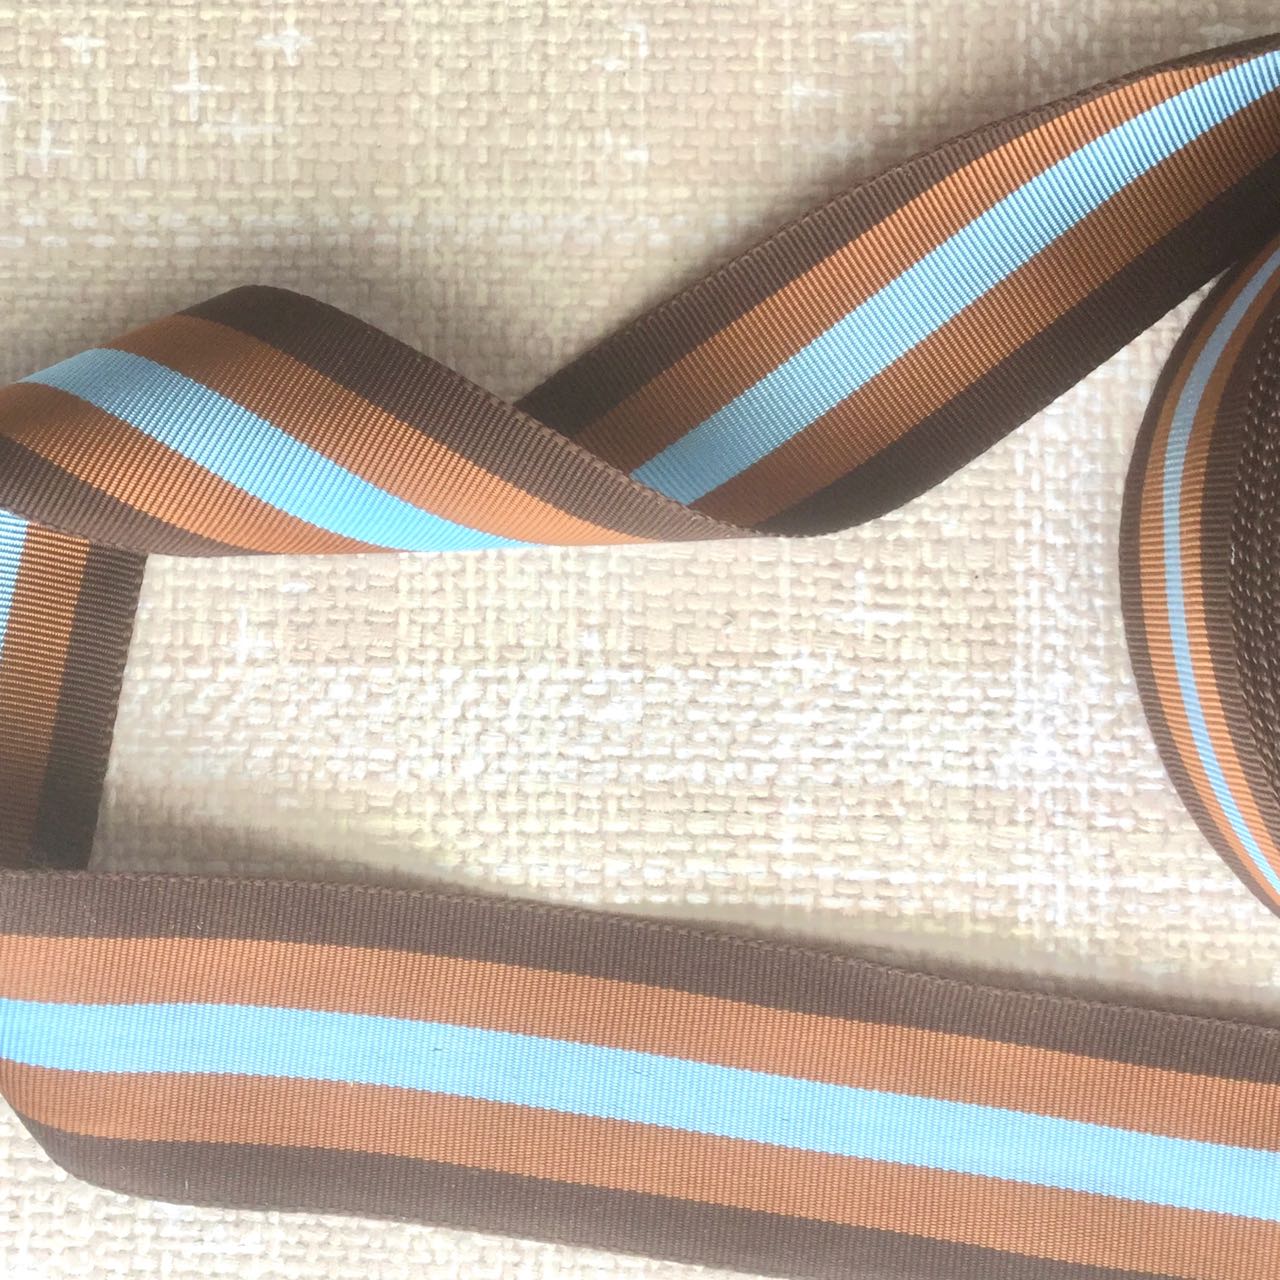 Striped Grosgrain ribbon, Vintage